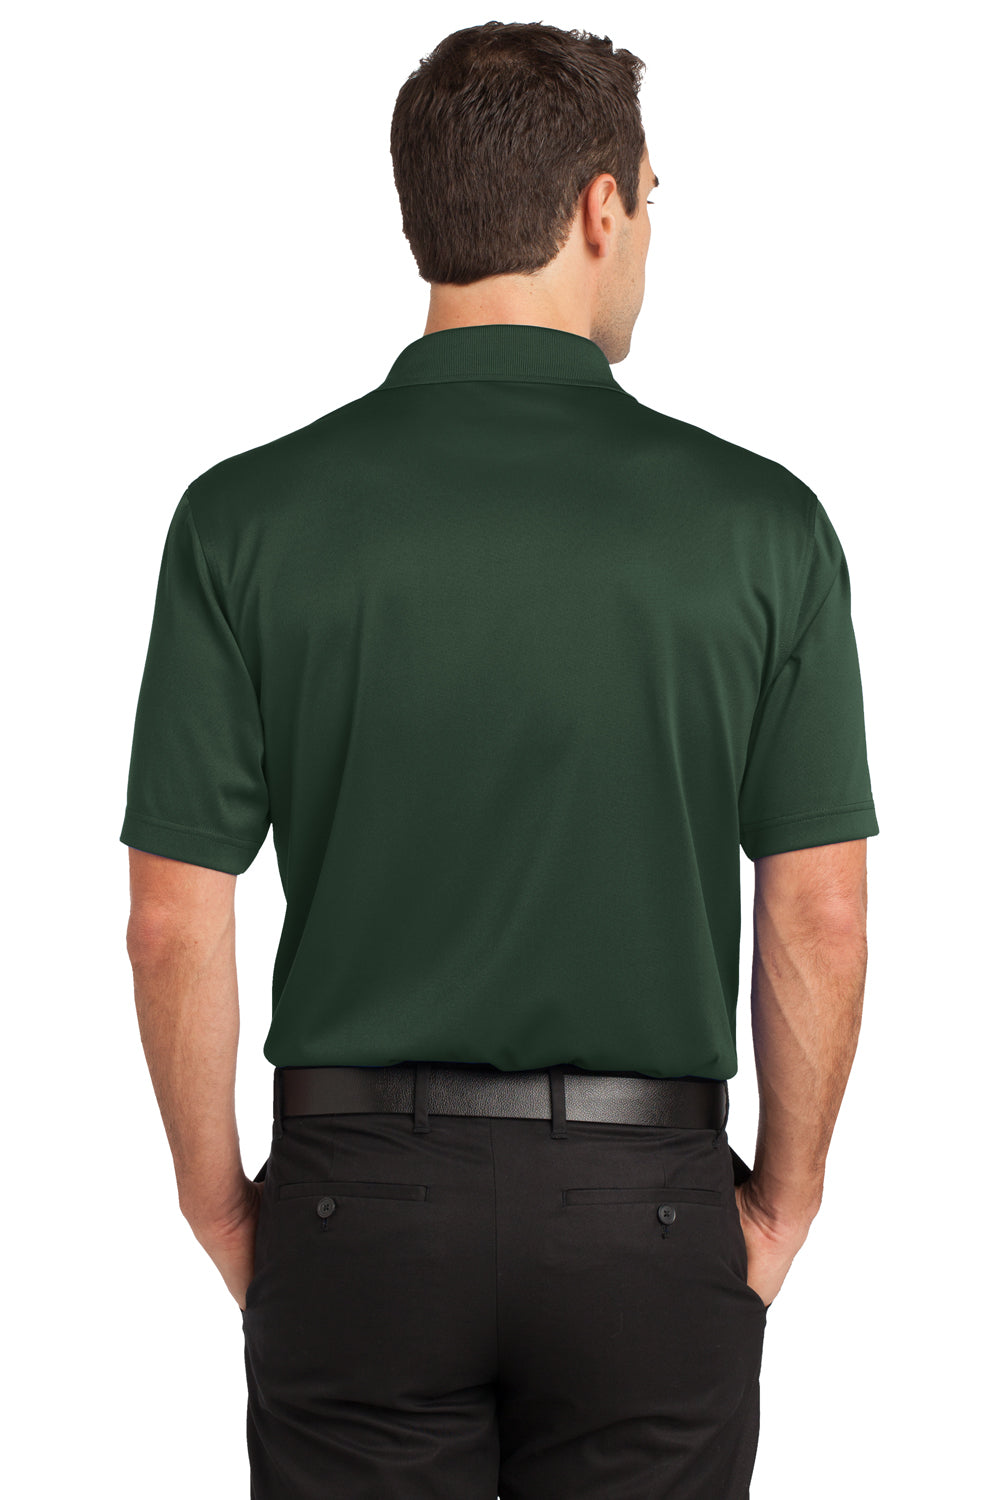 CornerStone CS412P Mens Select Moisture Wicking Short Sleeve Polo Shirt w/ Pocket Dark Green Back